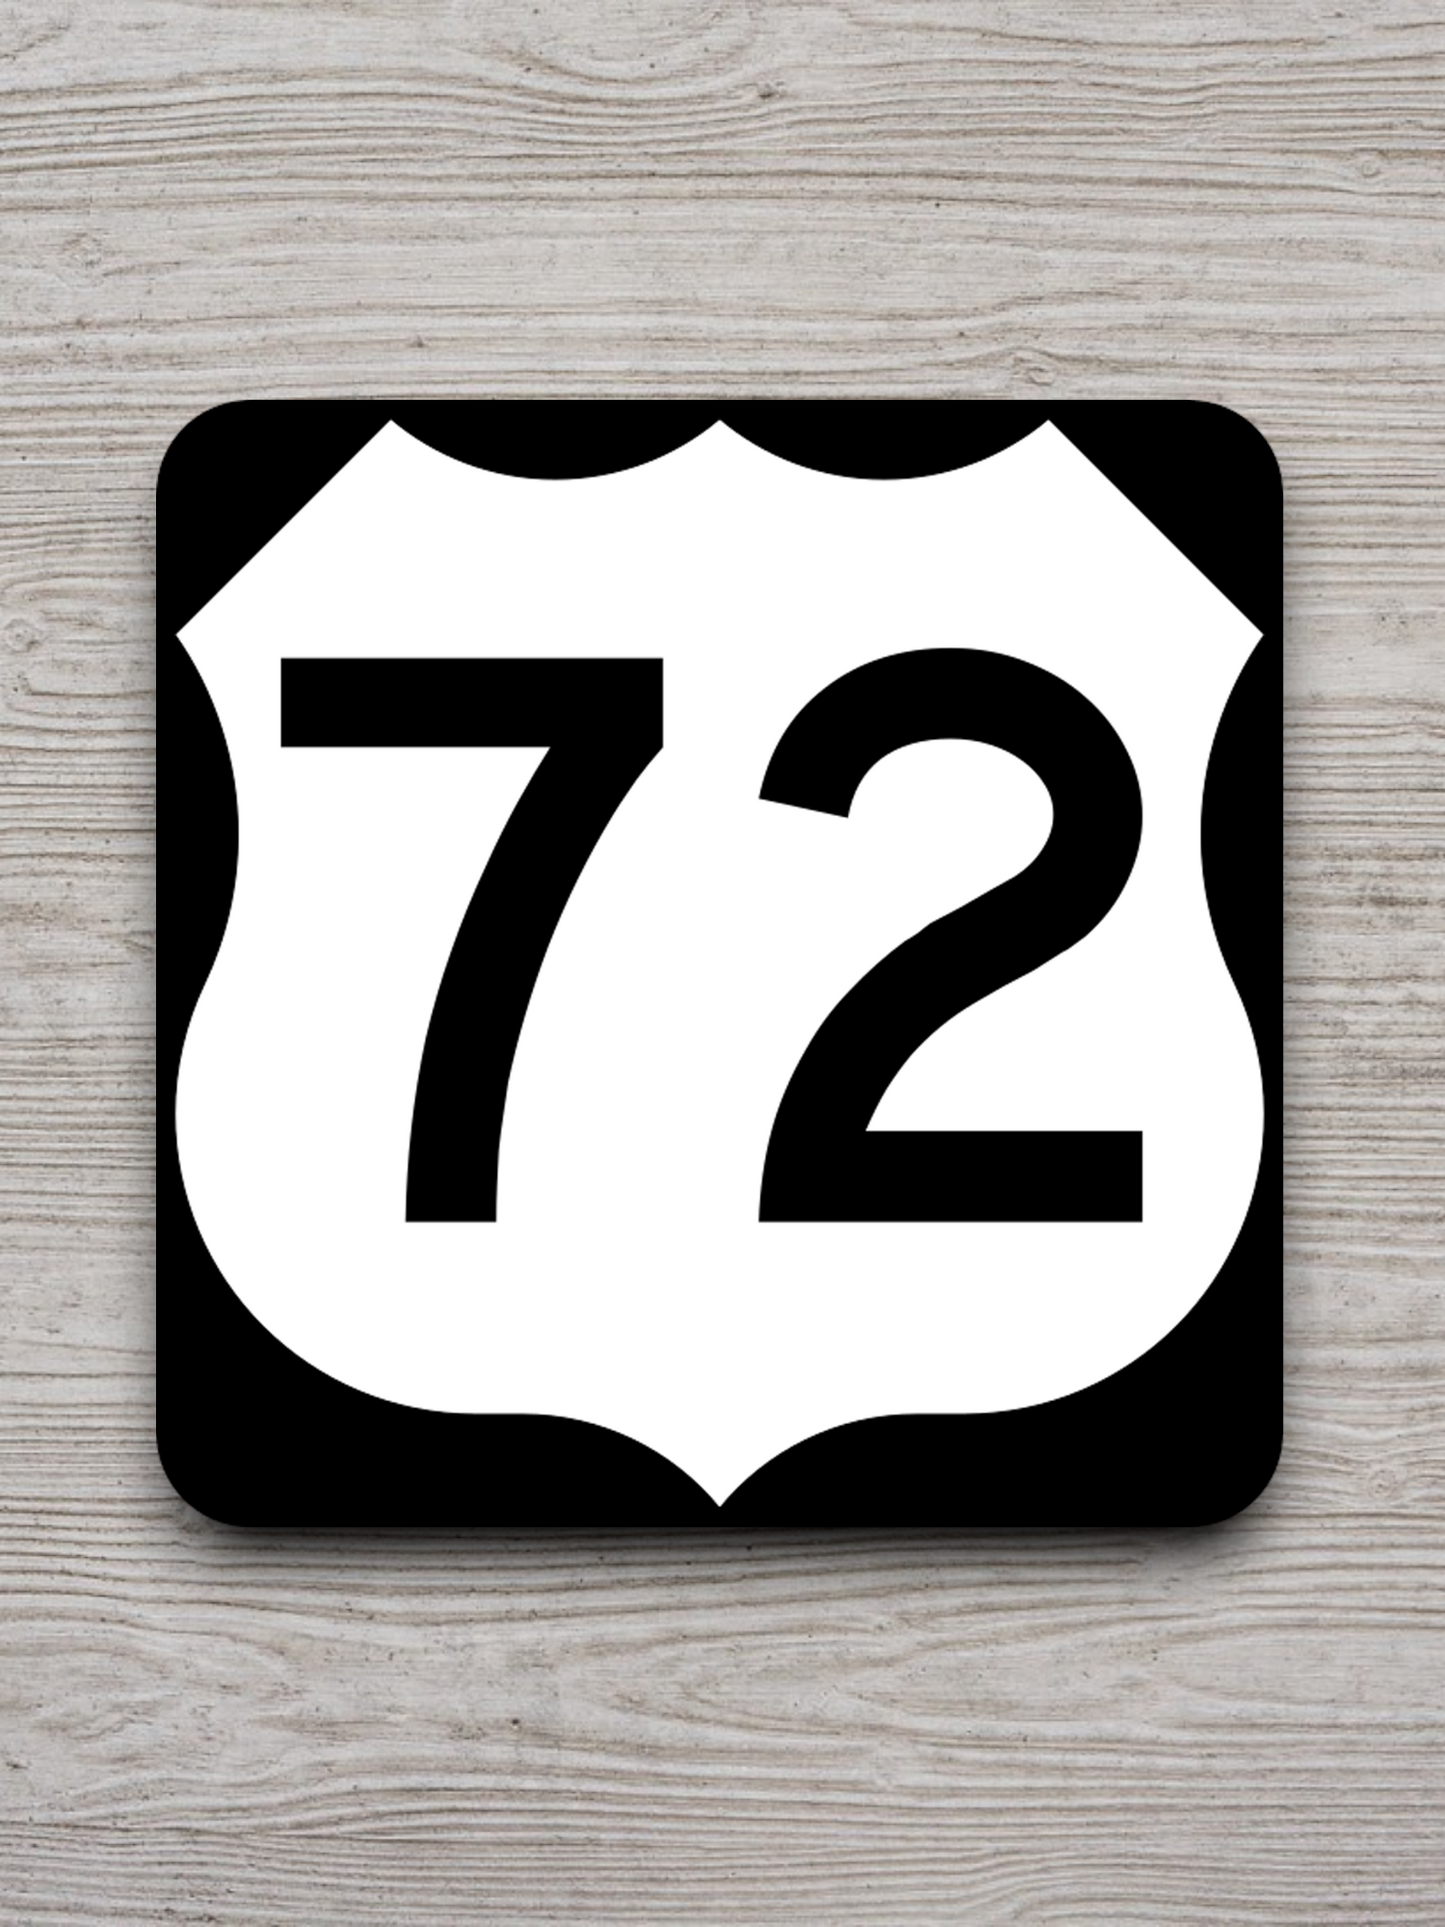 U.S. Route 72 Road Sign Sticker